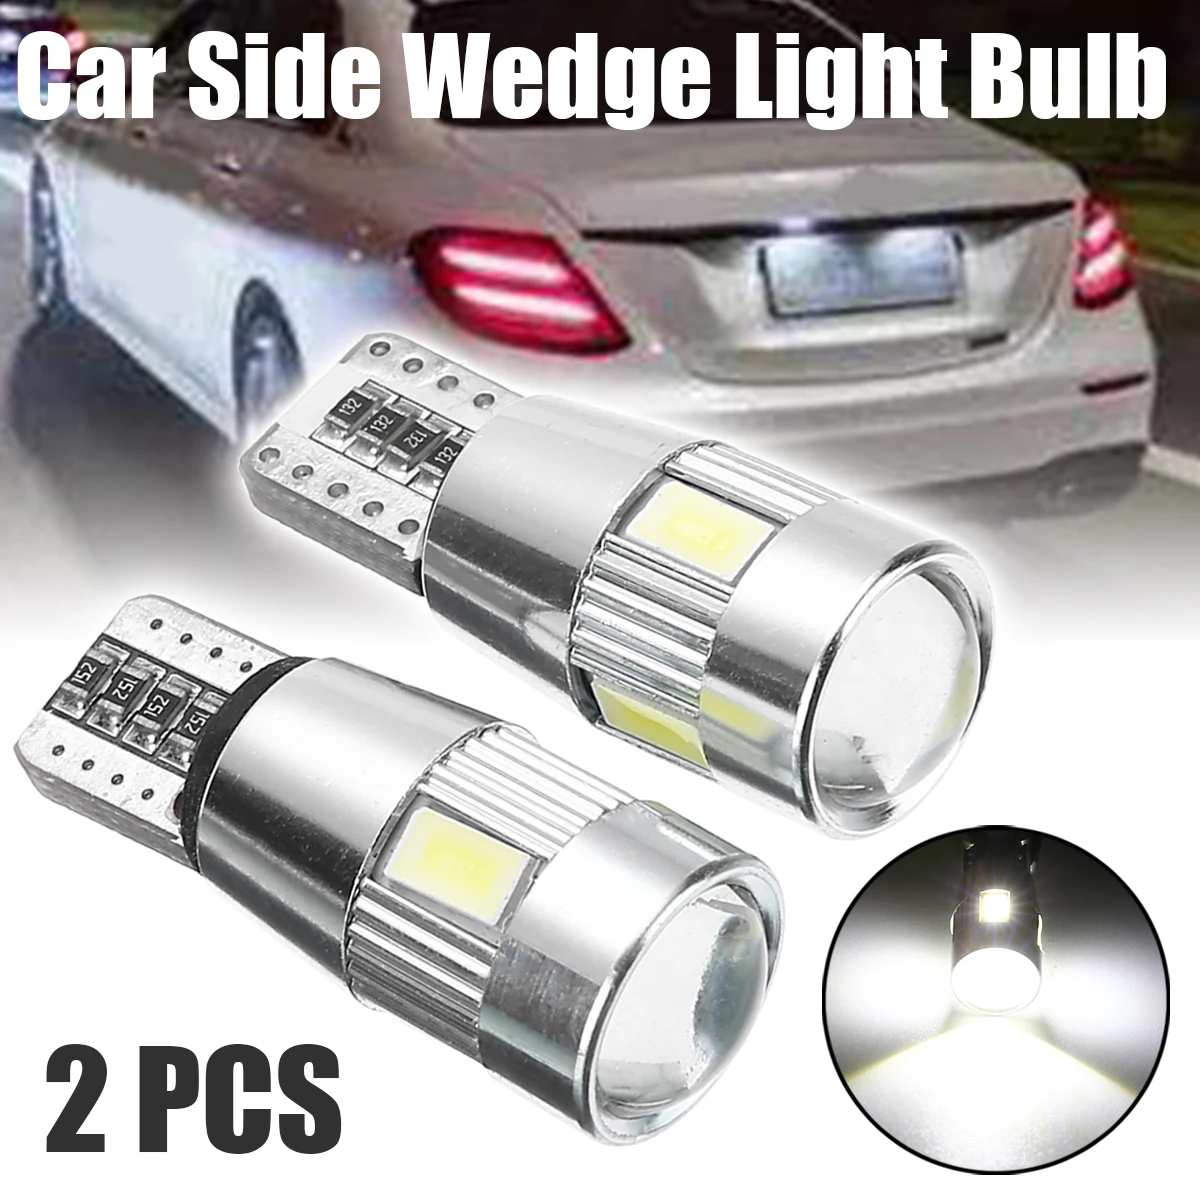 T10 501 W5W 5SMD LED ERROR FREE CANBUS Car Side Light Bulb for Car Van Truck